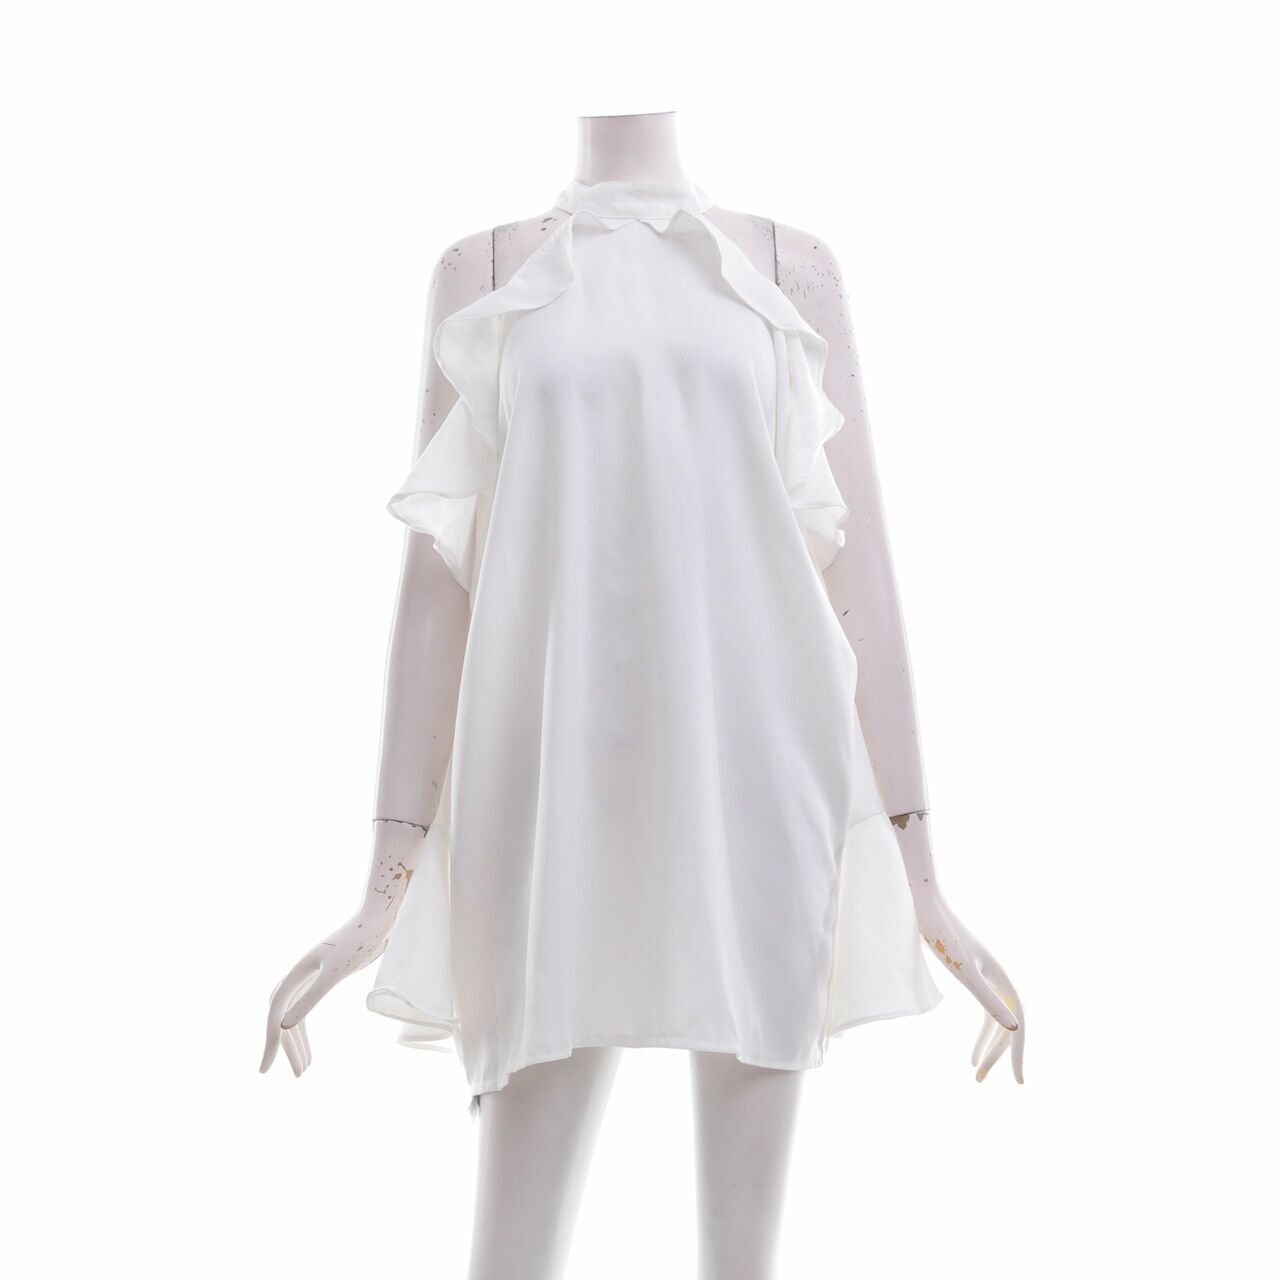 Pluffy's Choice White Mini Dress